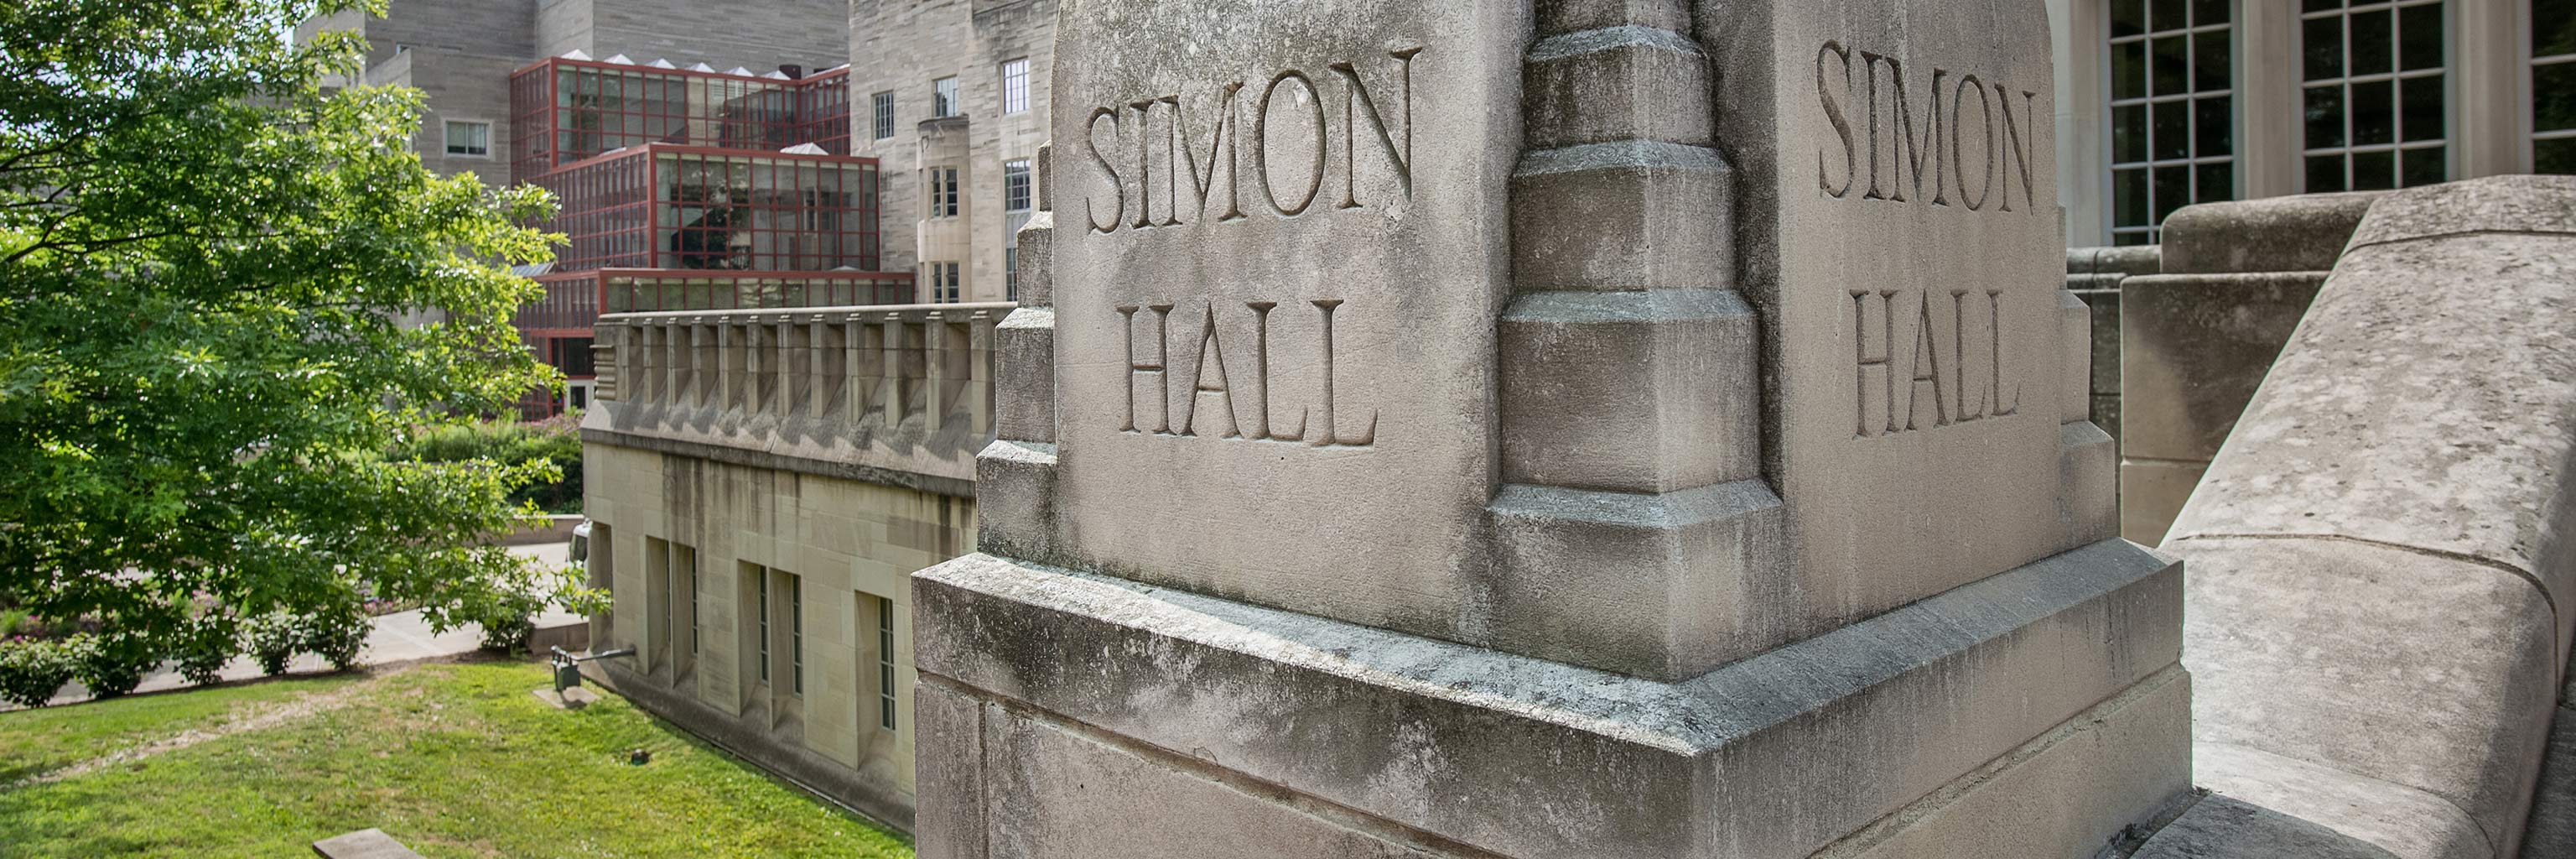 Simon Hall engraved building sign